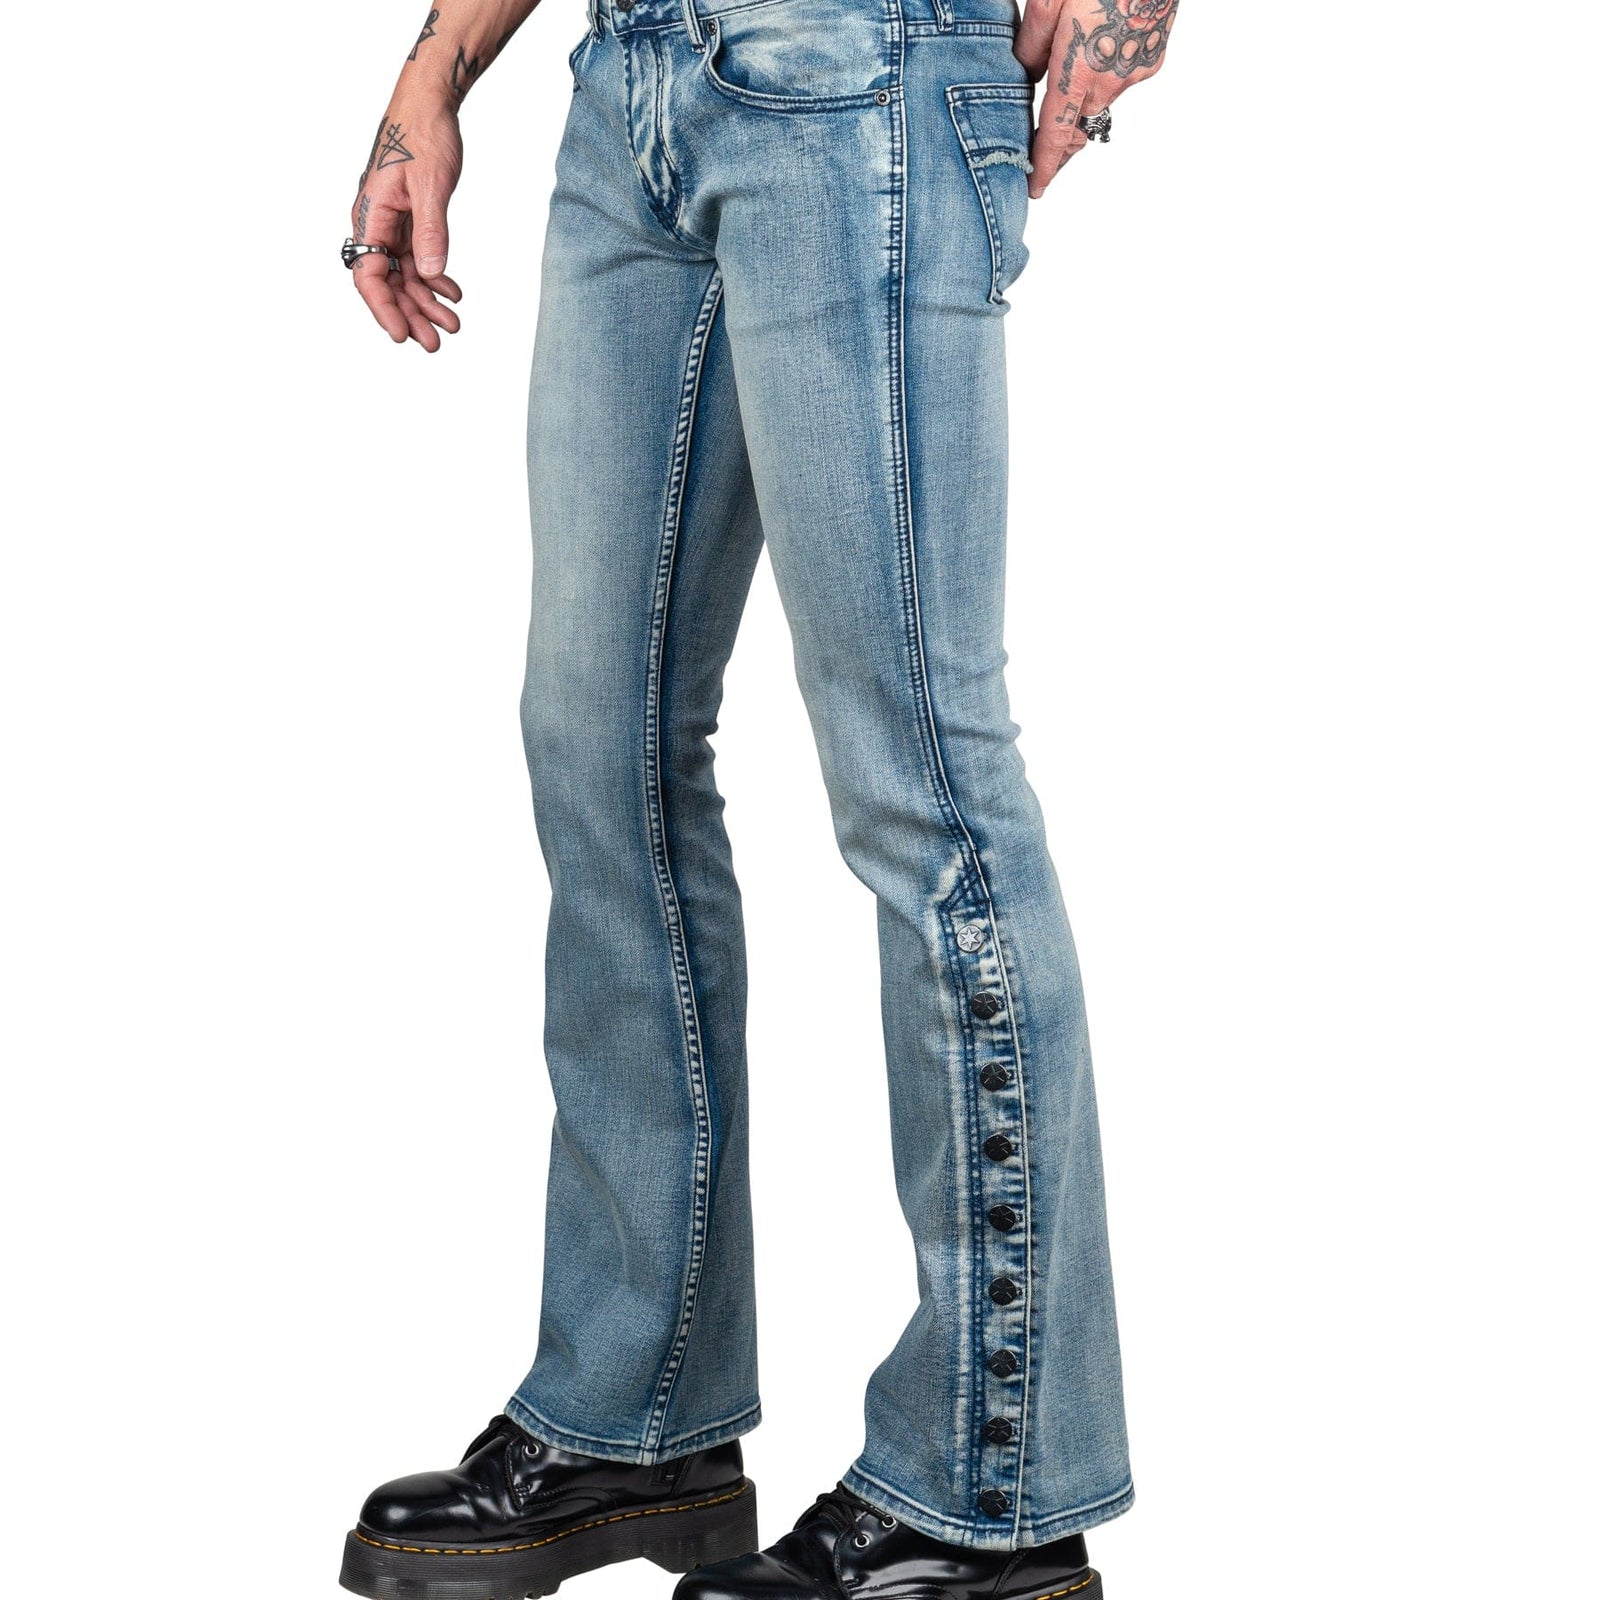 Wornstar Clothing Hellraiser Side Button Mens Jeans - Classic Blue